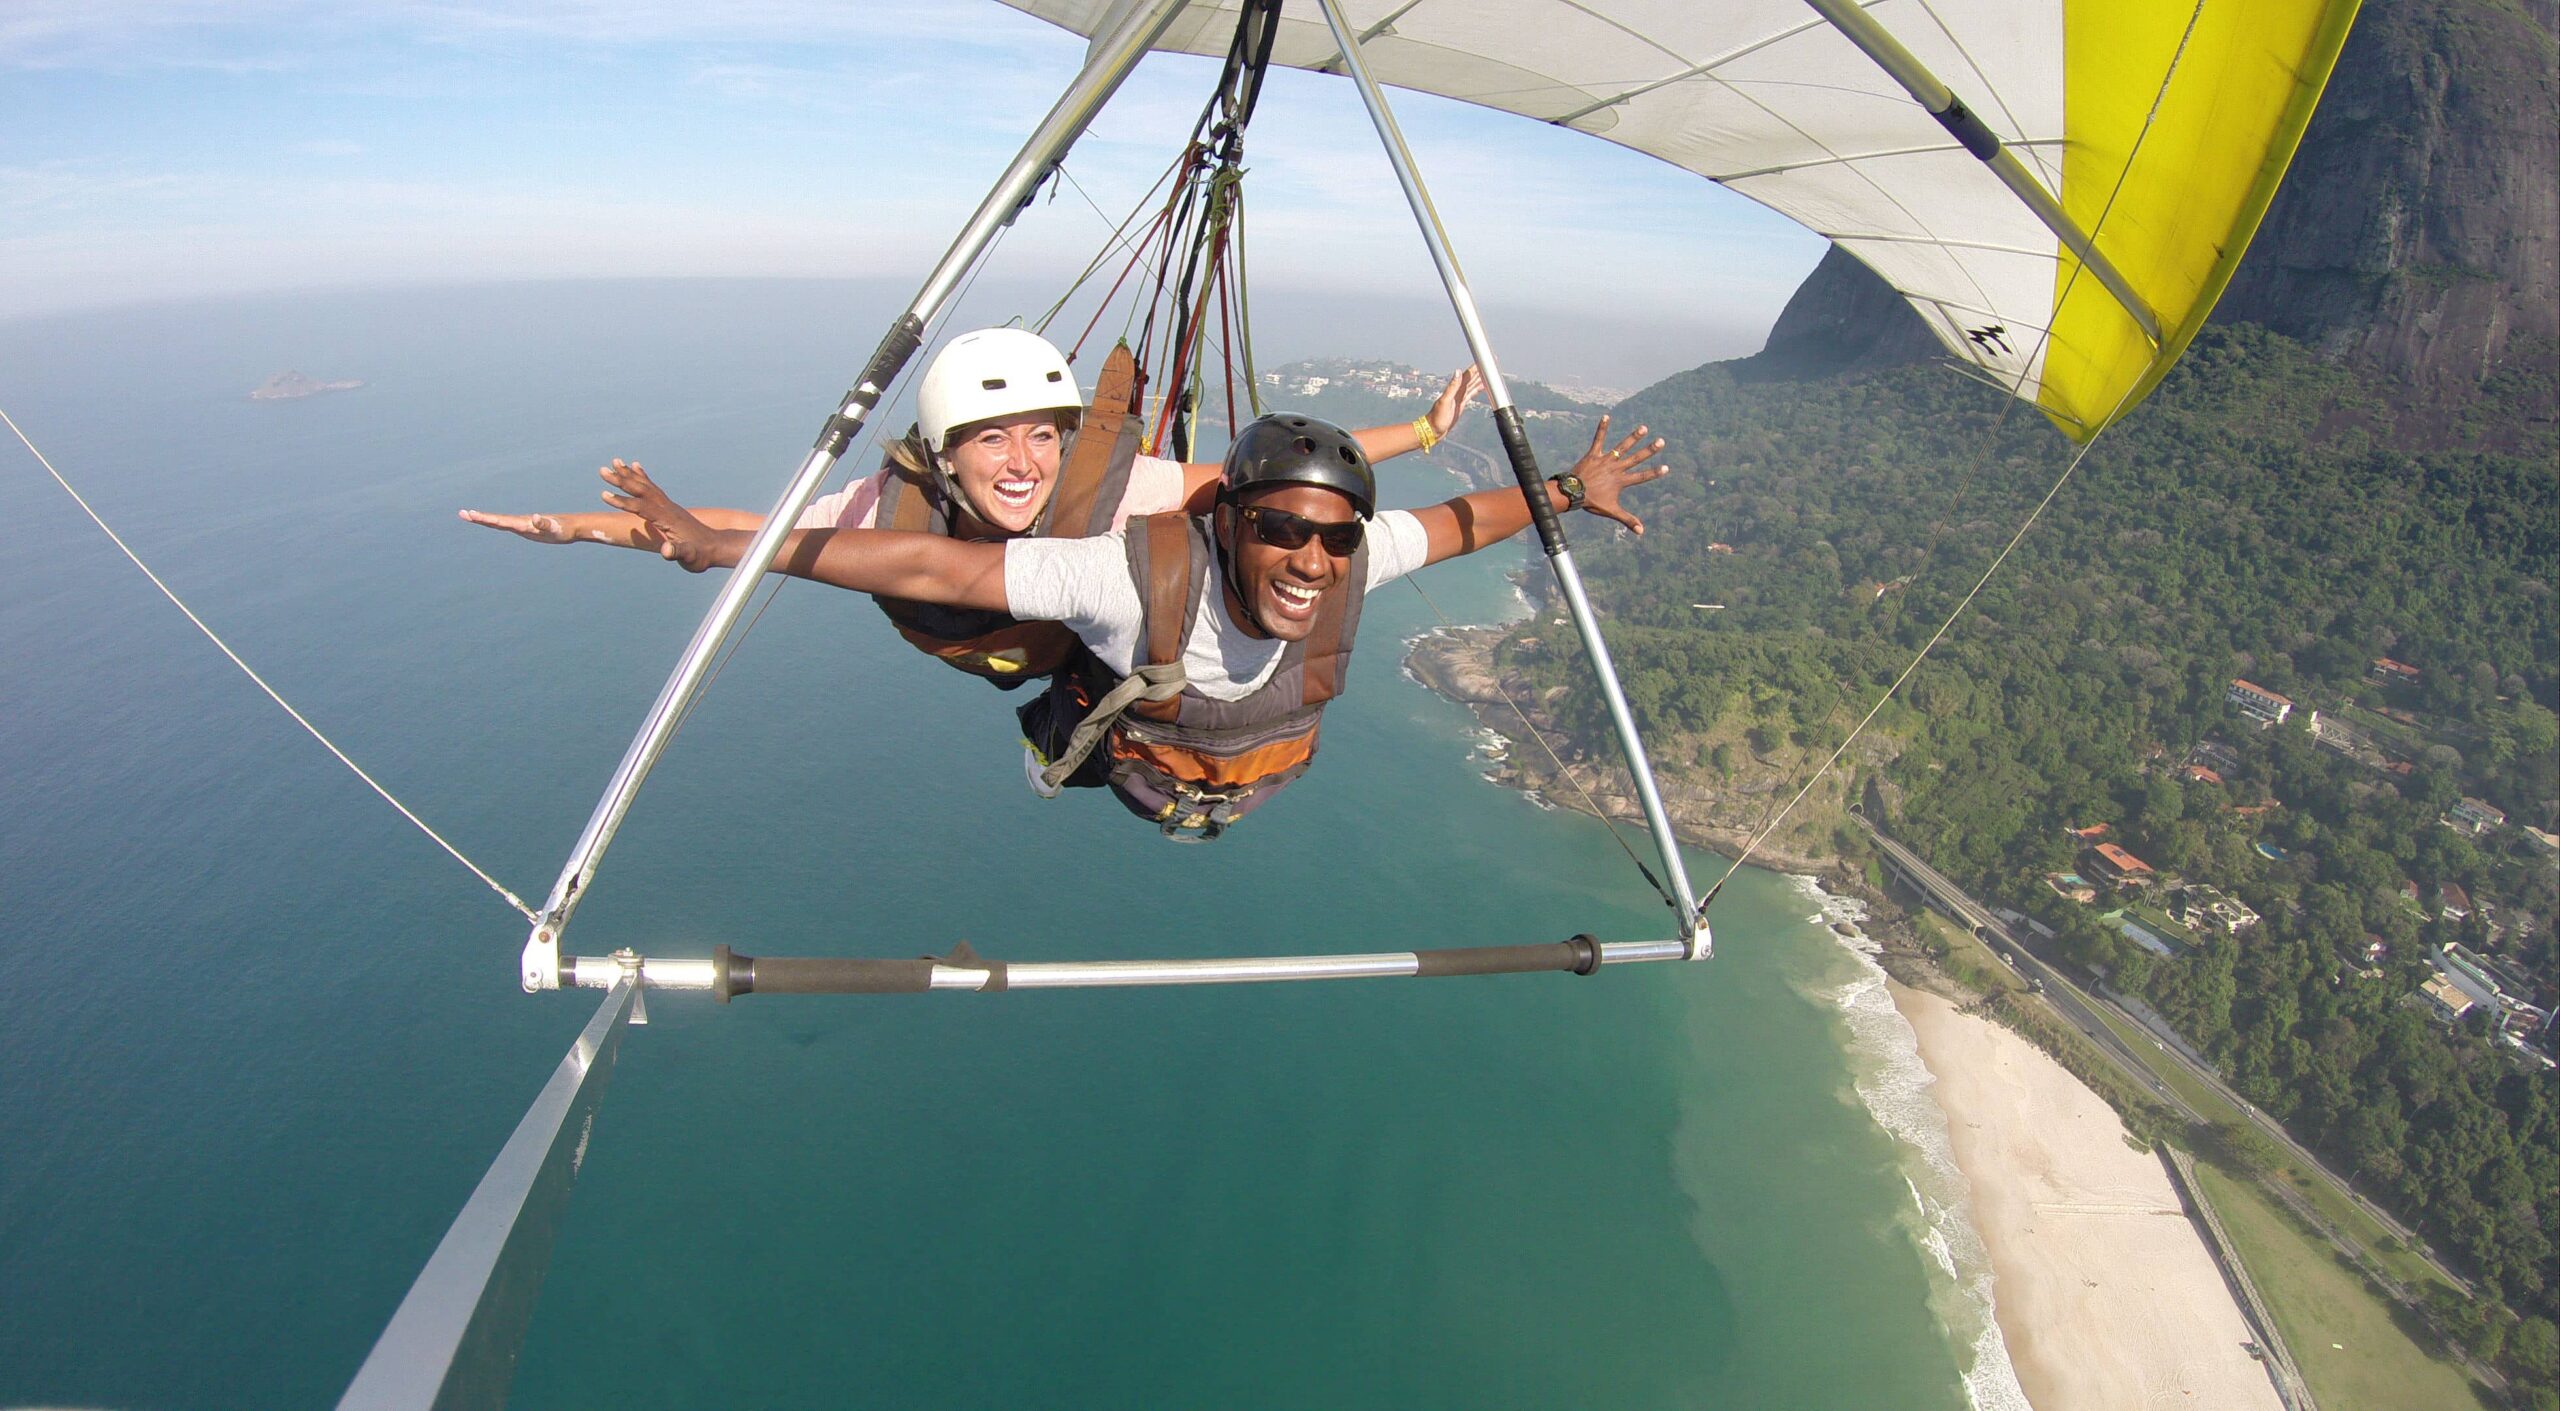 Hang_Glider_flight_in_Rio-scaled.jpg